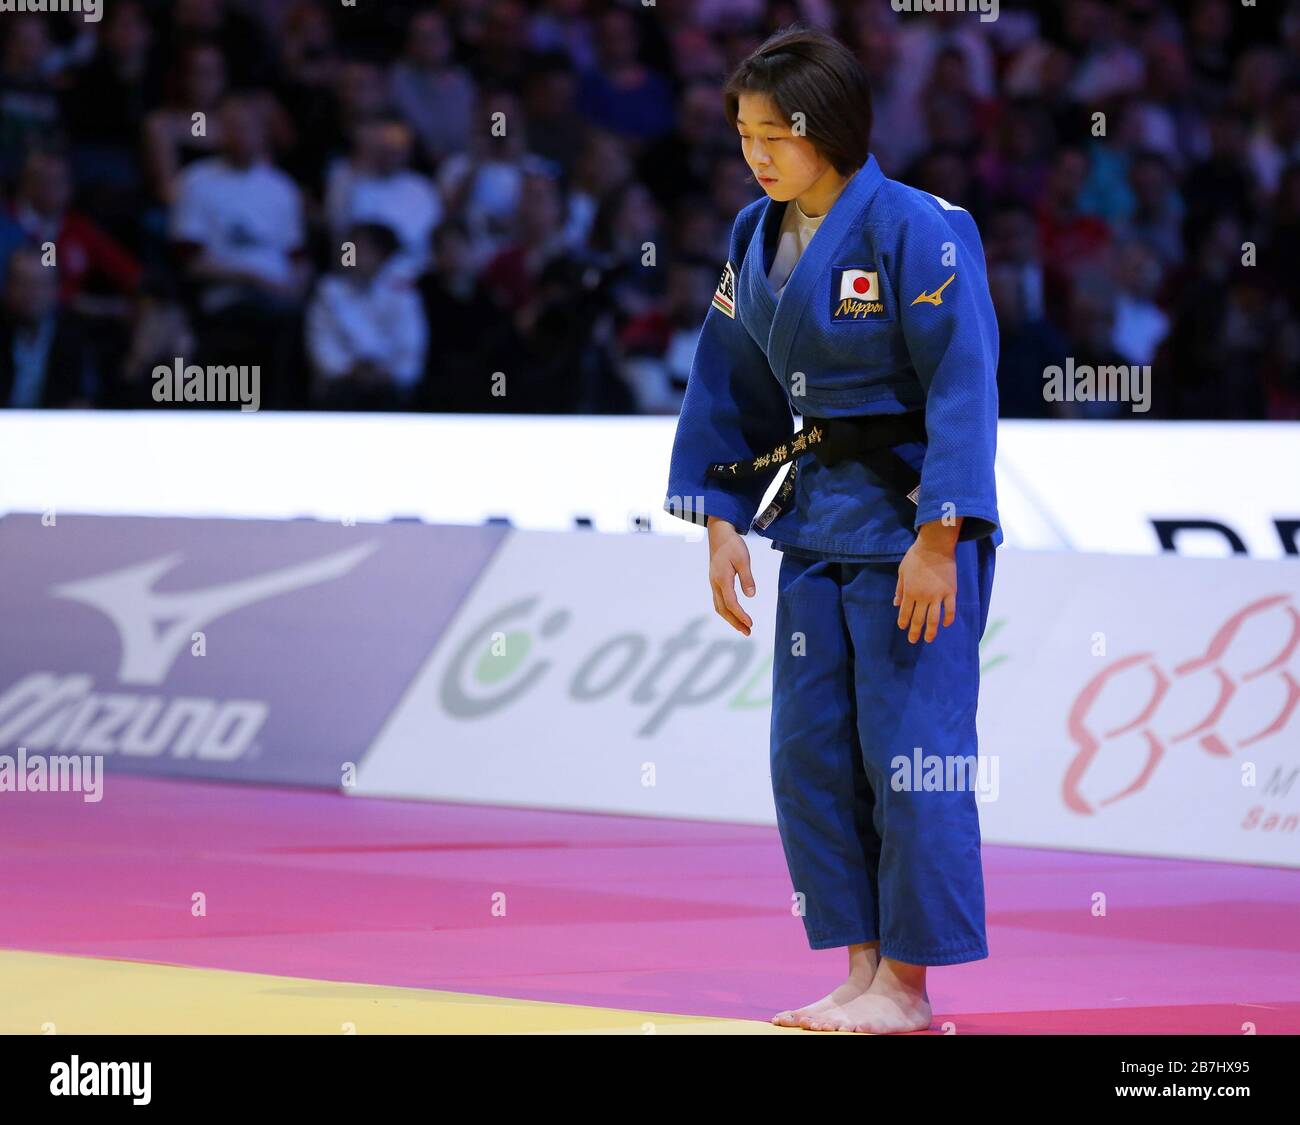 Paris, France - 08th Feb, 2020: Daria Bilodid for Ukraine against Wakana Koga for Japan, Women's -48kg, Gold Medal Match (Credit: Mickael Chavet) Stock Photo